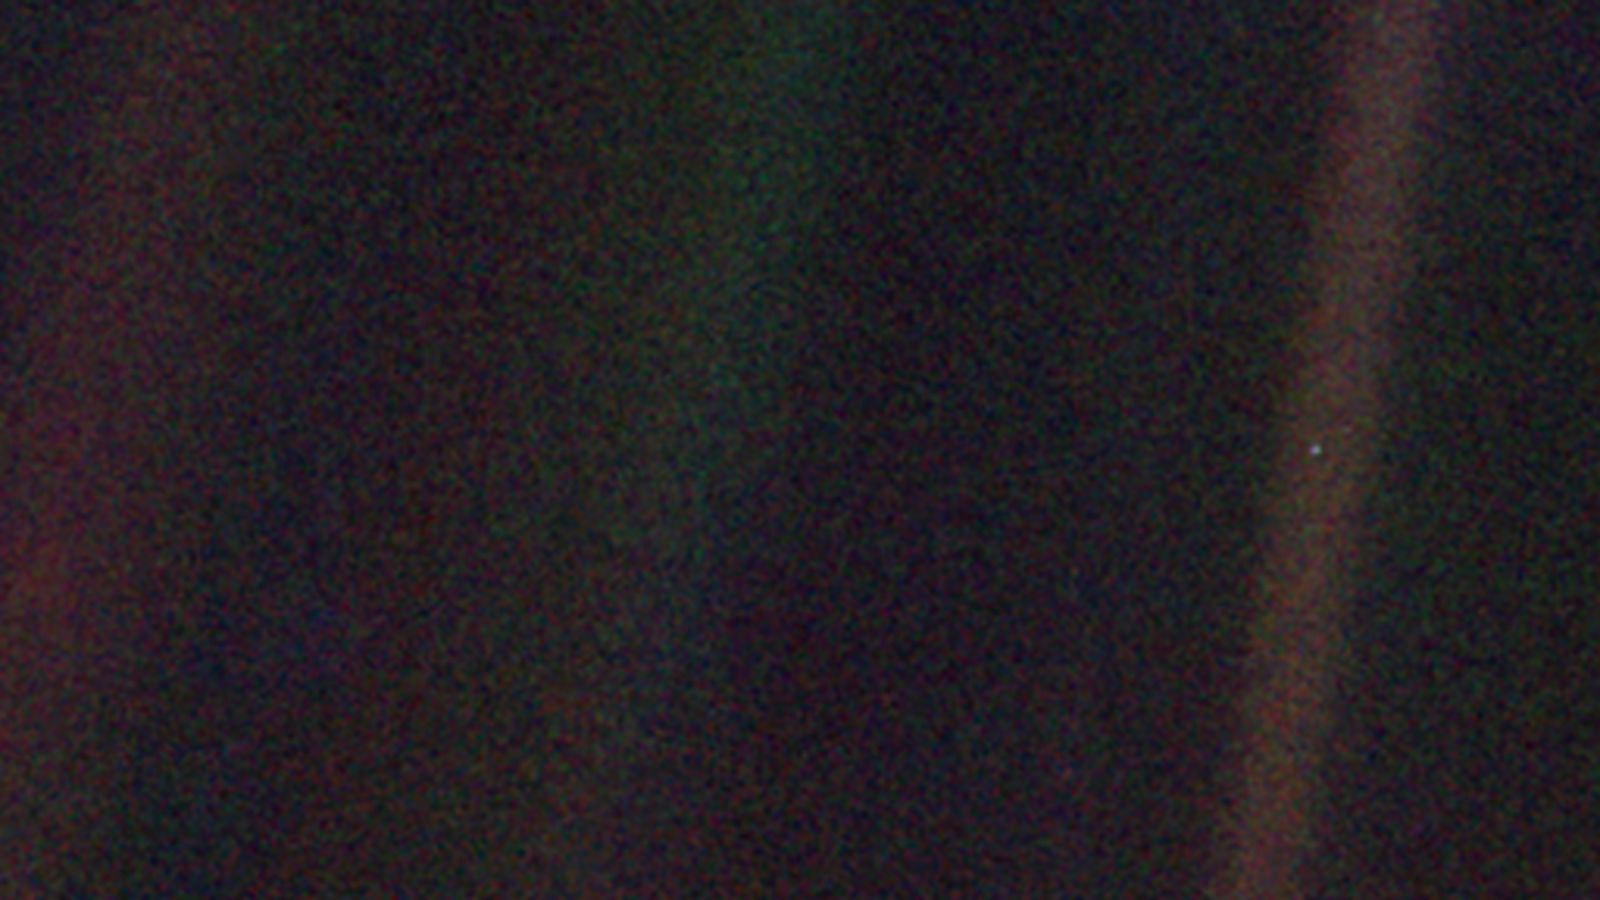 Carl Sagan and His Famous 'Pale Blue Dot' Speech (1994) @ Free Xenon